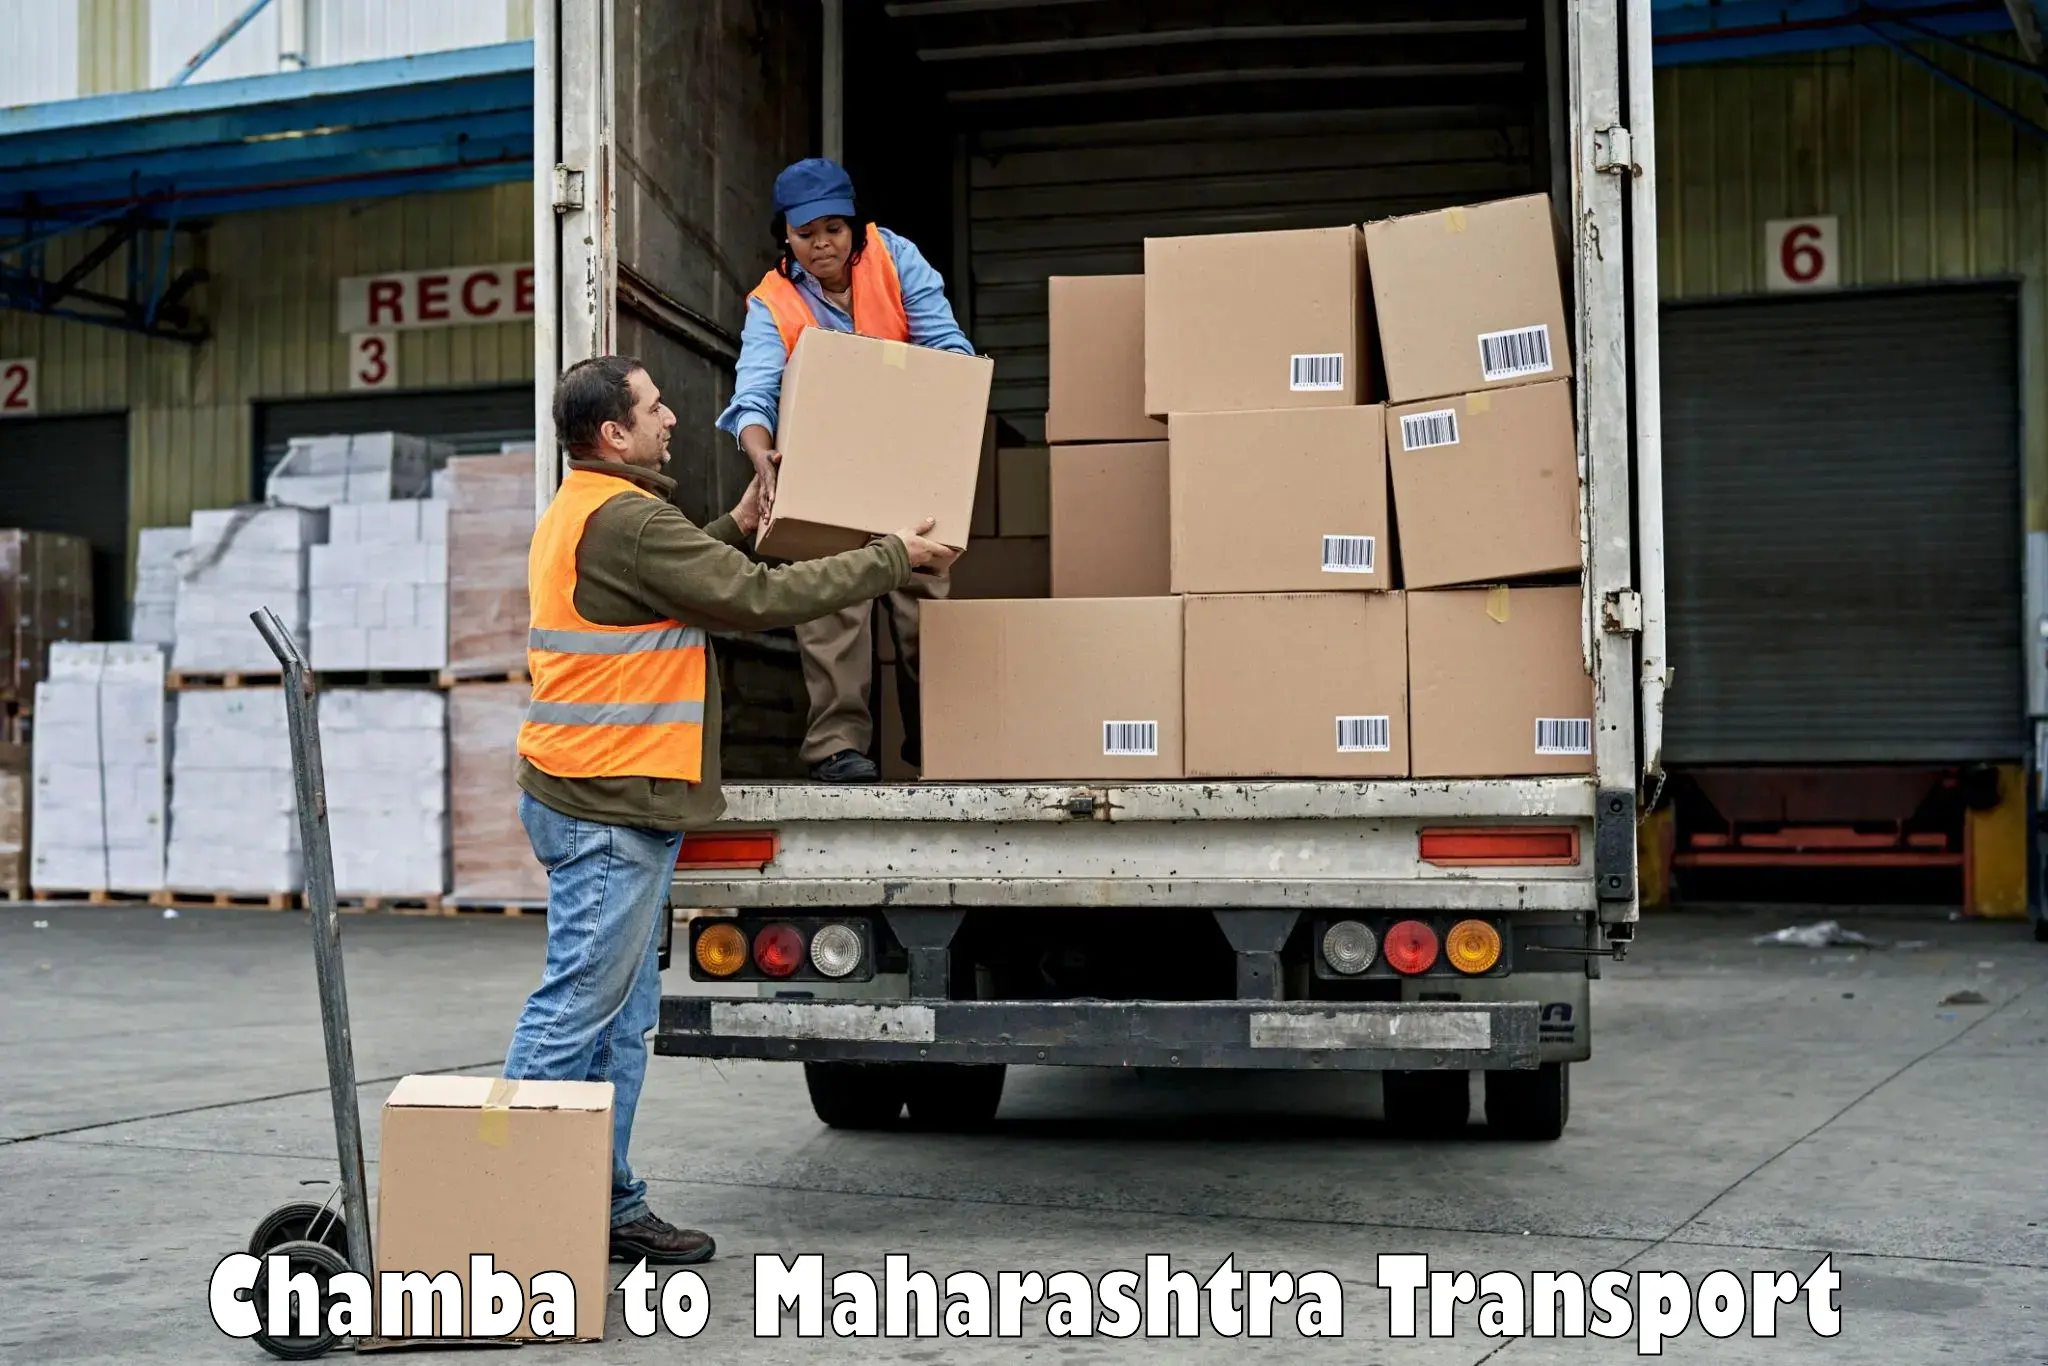 Delivery service Chamba to Ballarpur